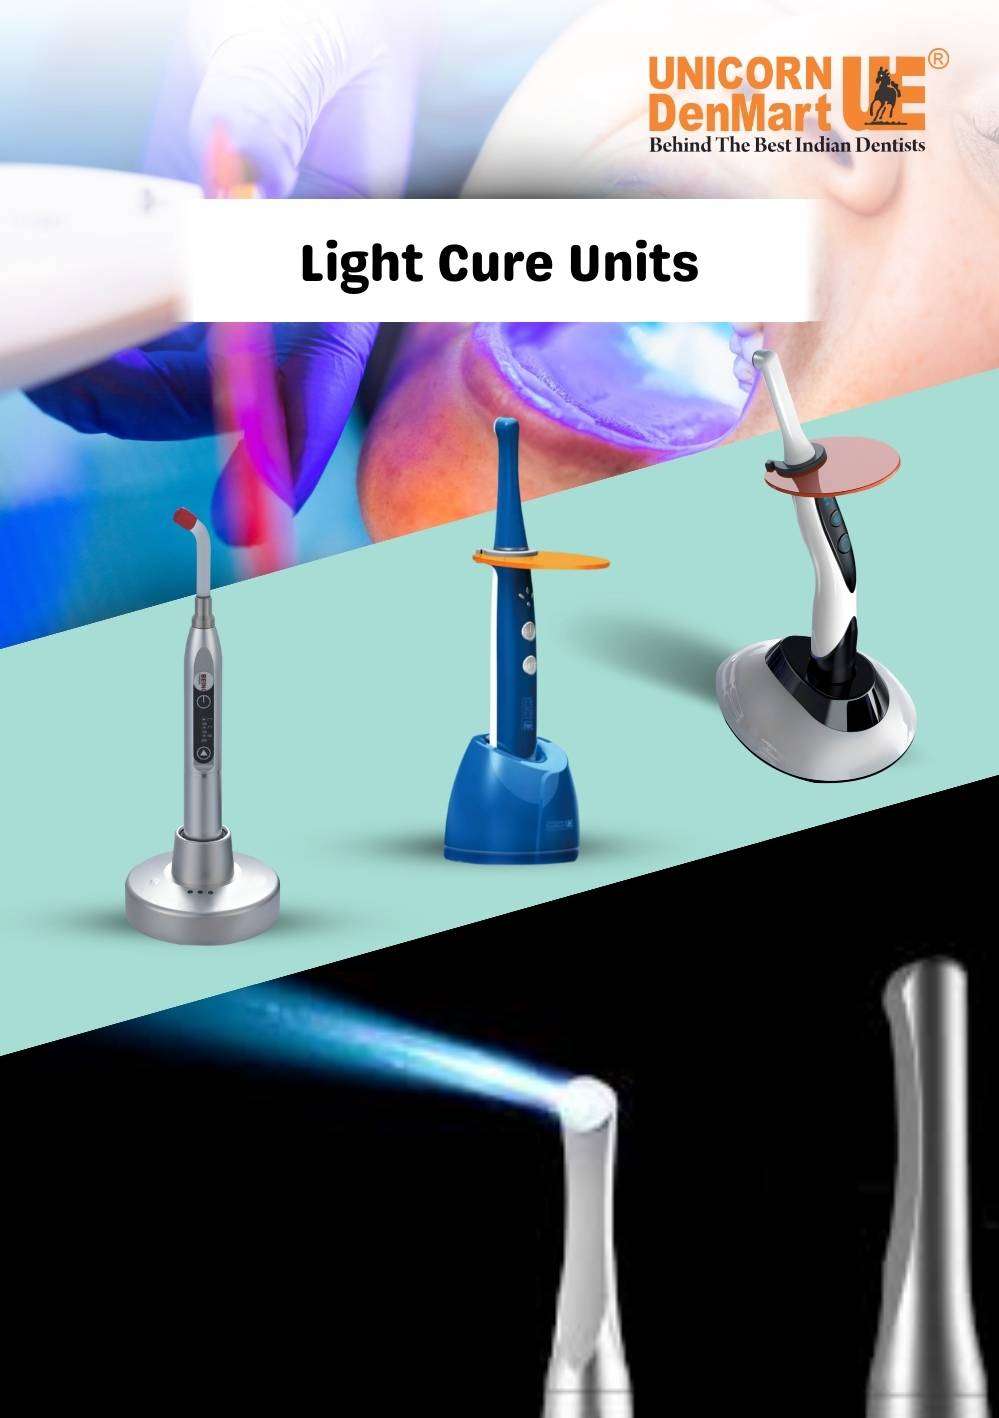 Light Cure Unit by Unicorn Denmart